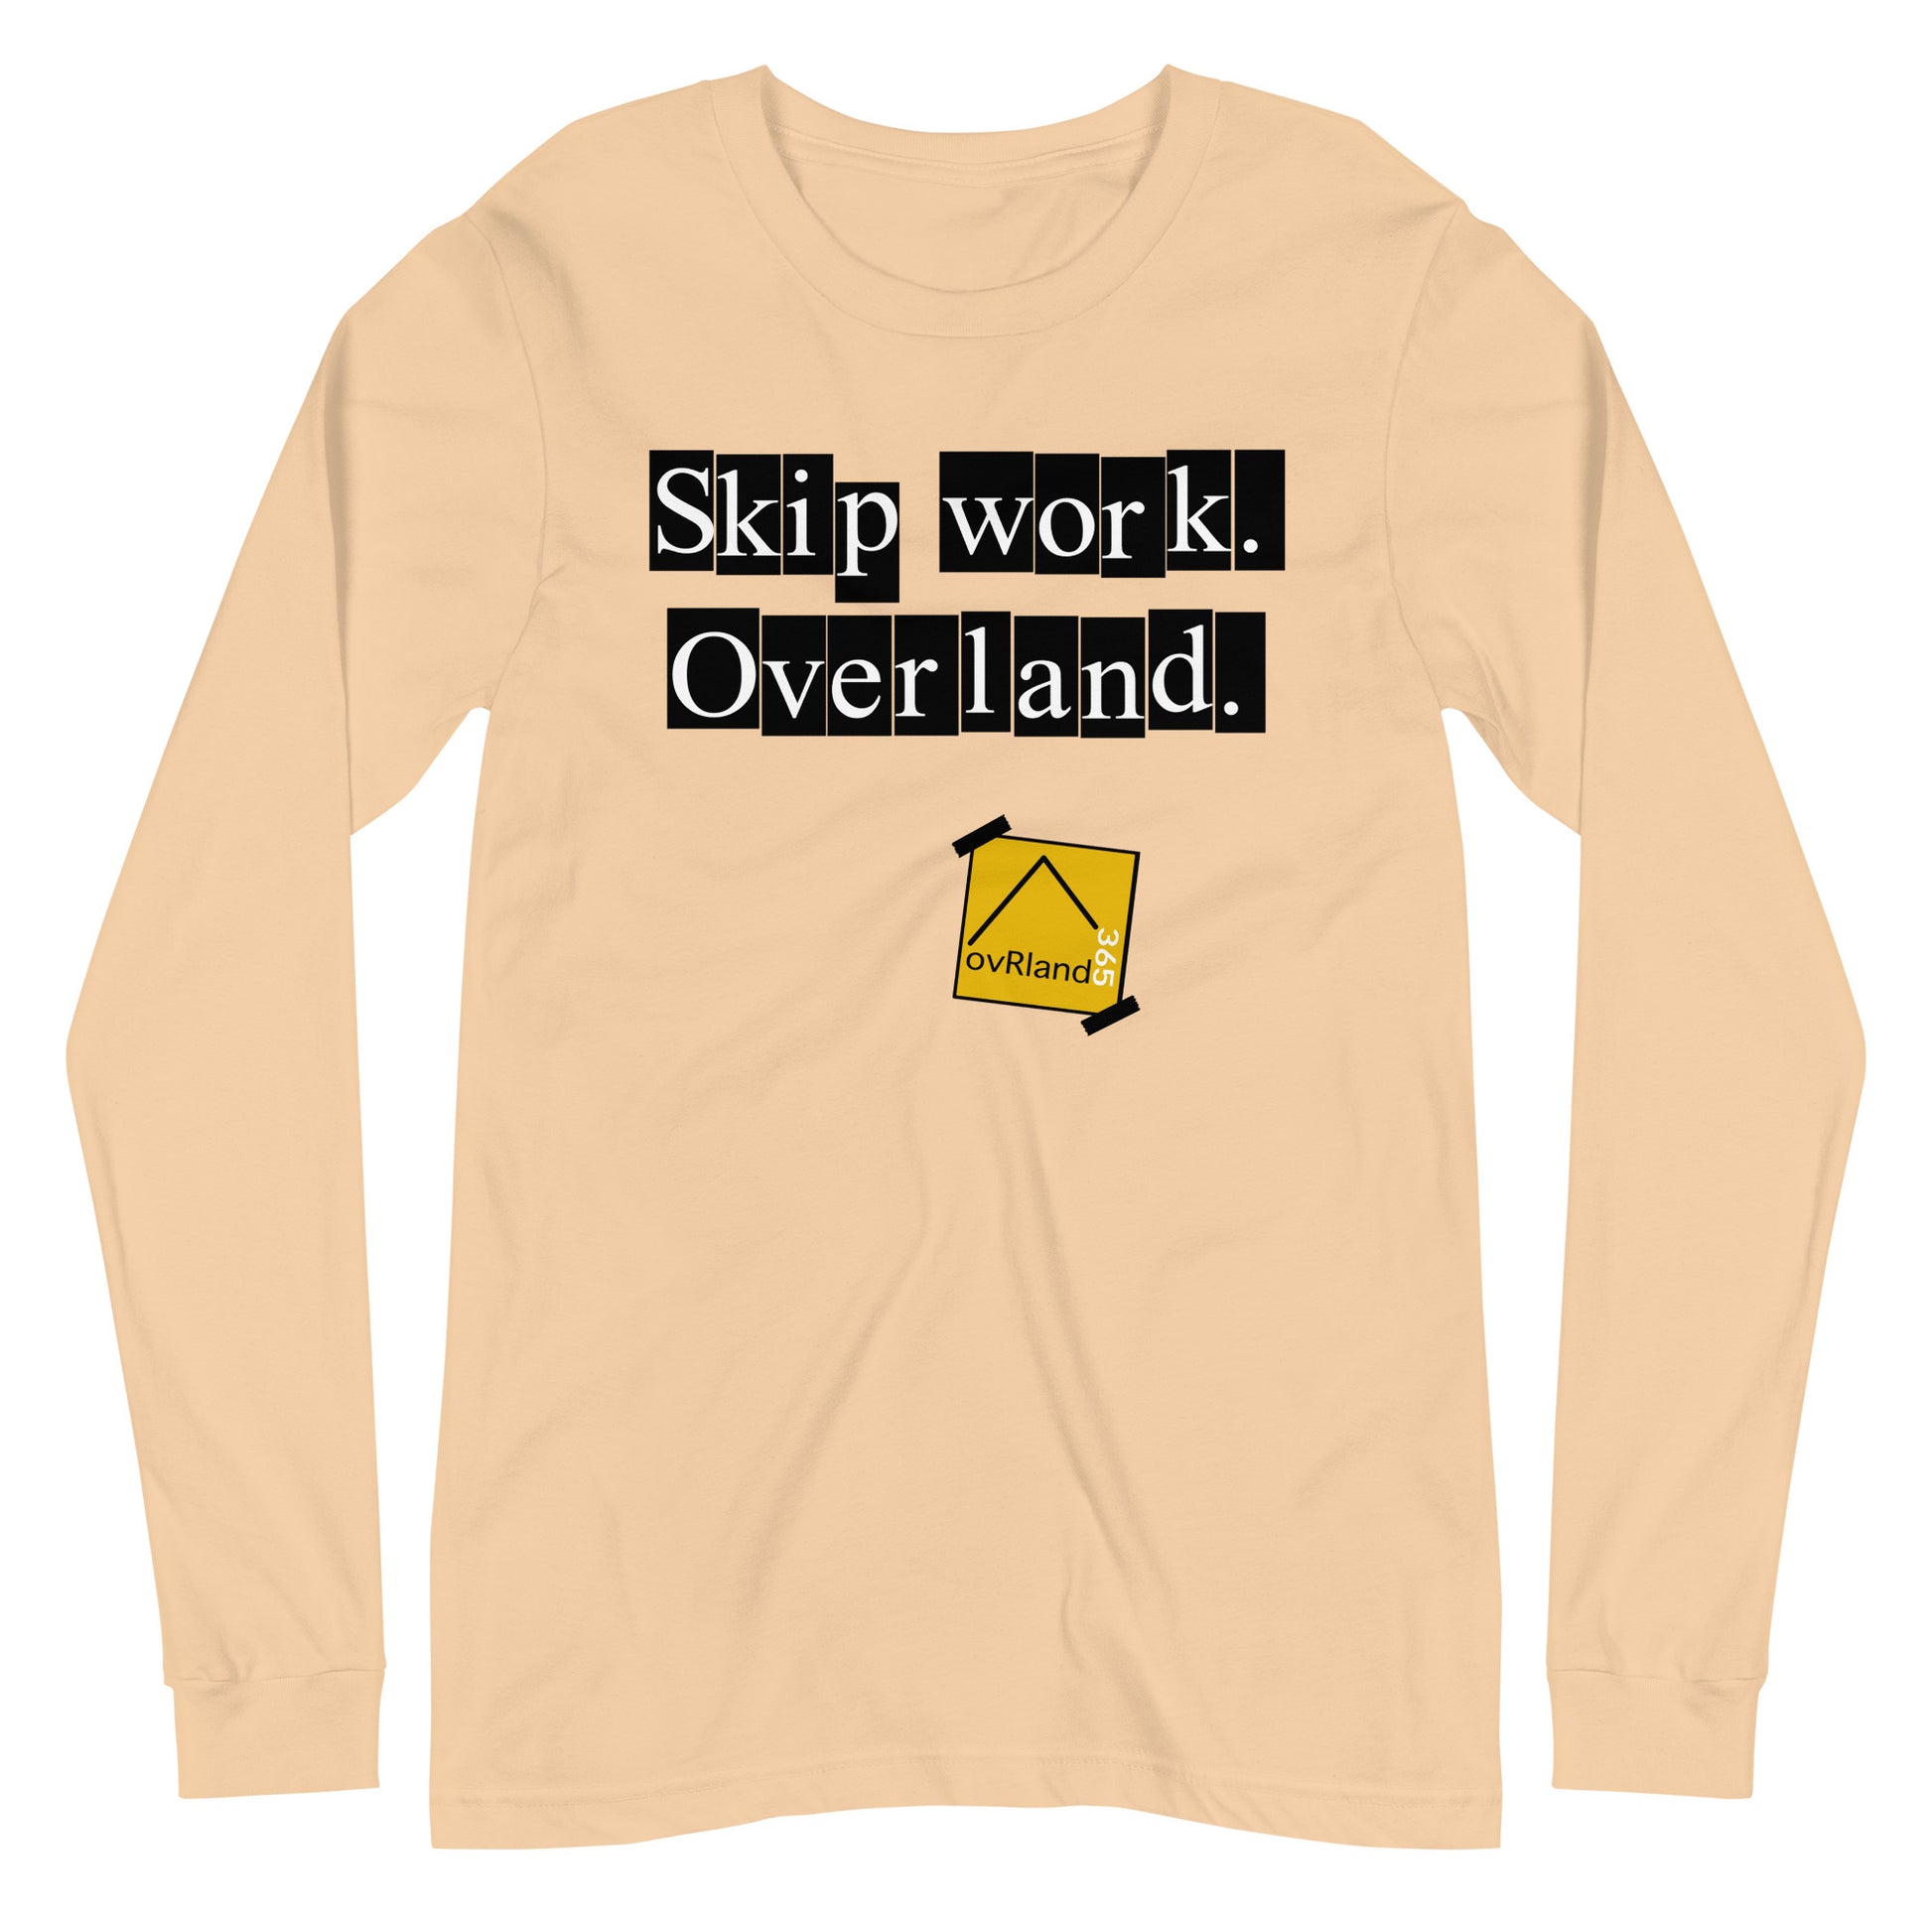 Skip work. Overland. Tan long-sleeve. overland365.com